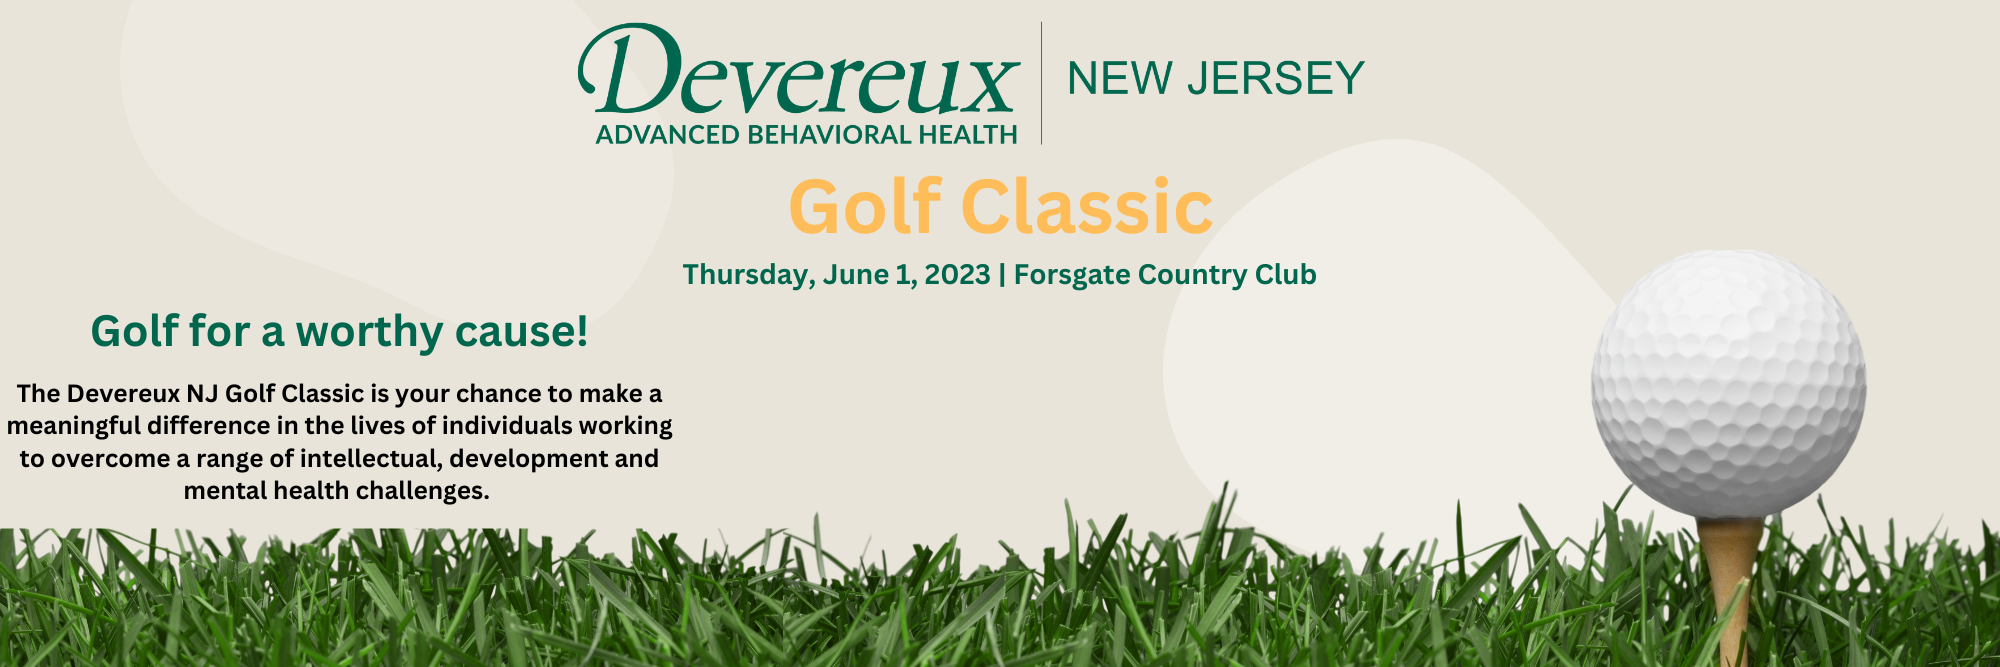 New Jersey Golf Classic